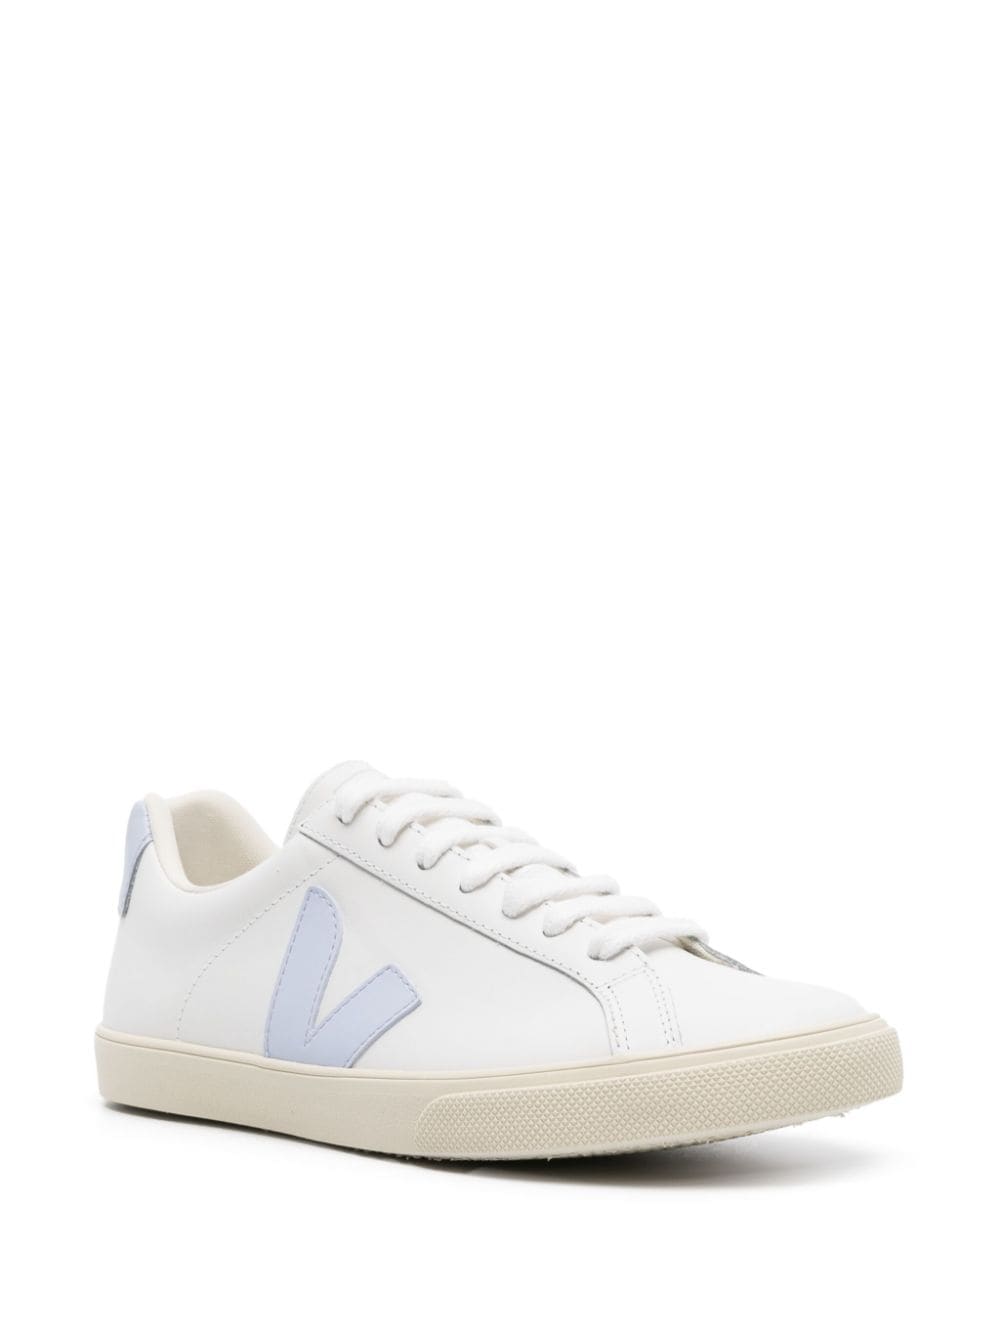 Image 2 of VEJA Esplar leather sneakers